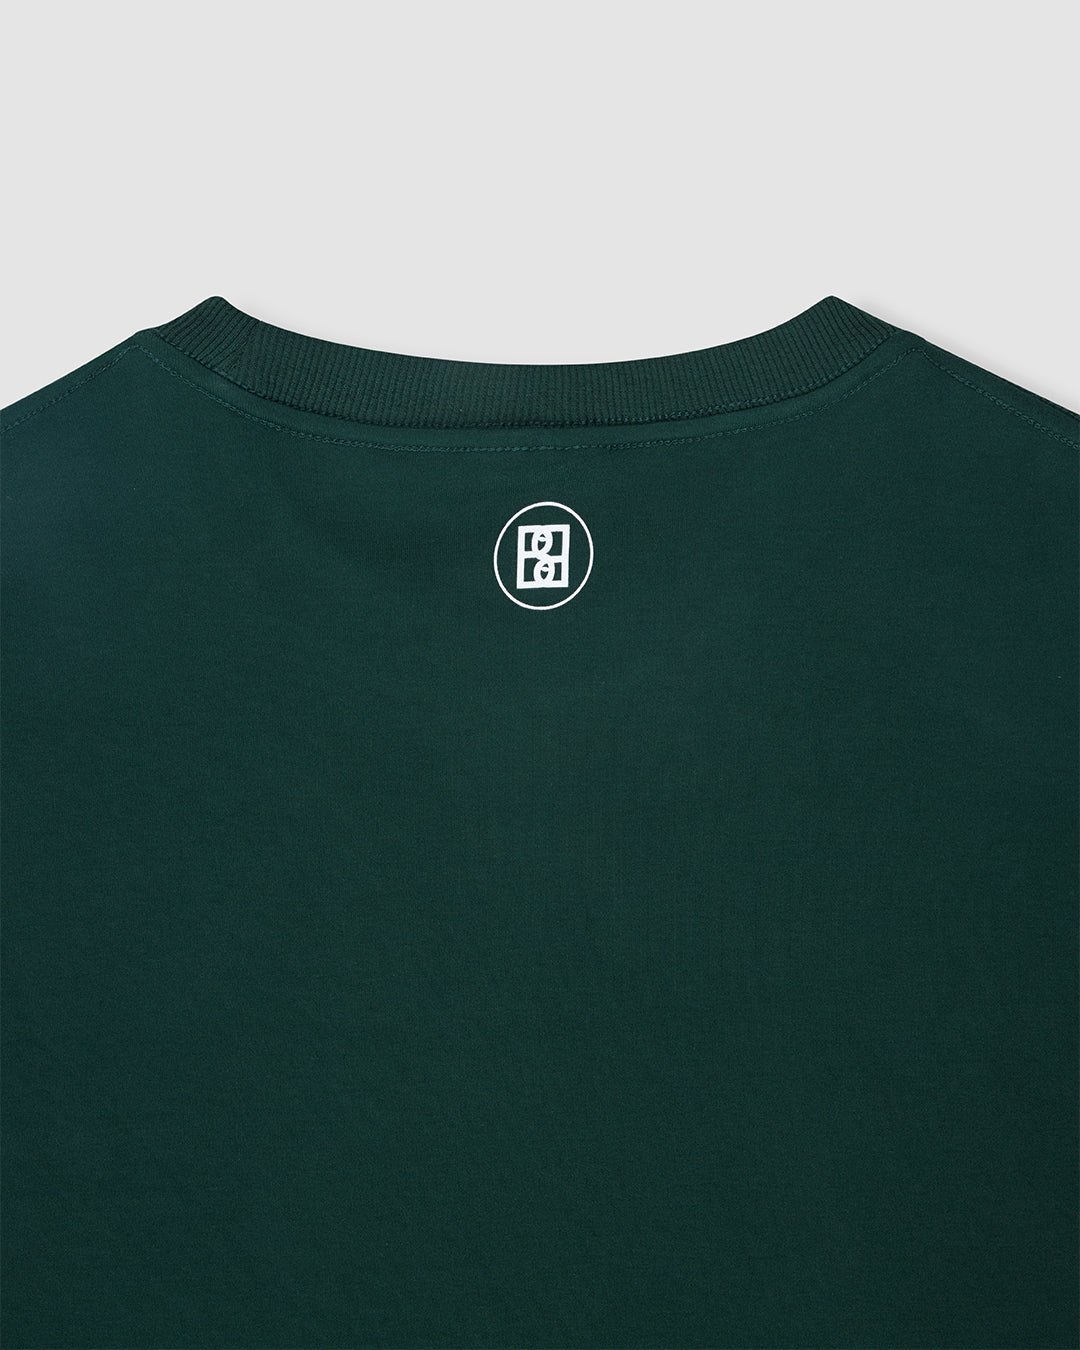 BLURRY RTM Studios T-Shirt (Forest Green/White)